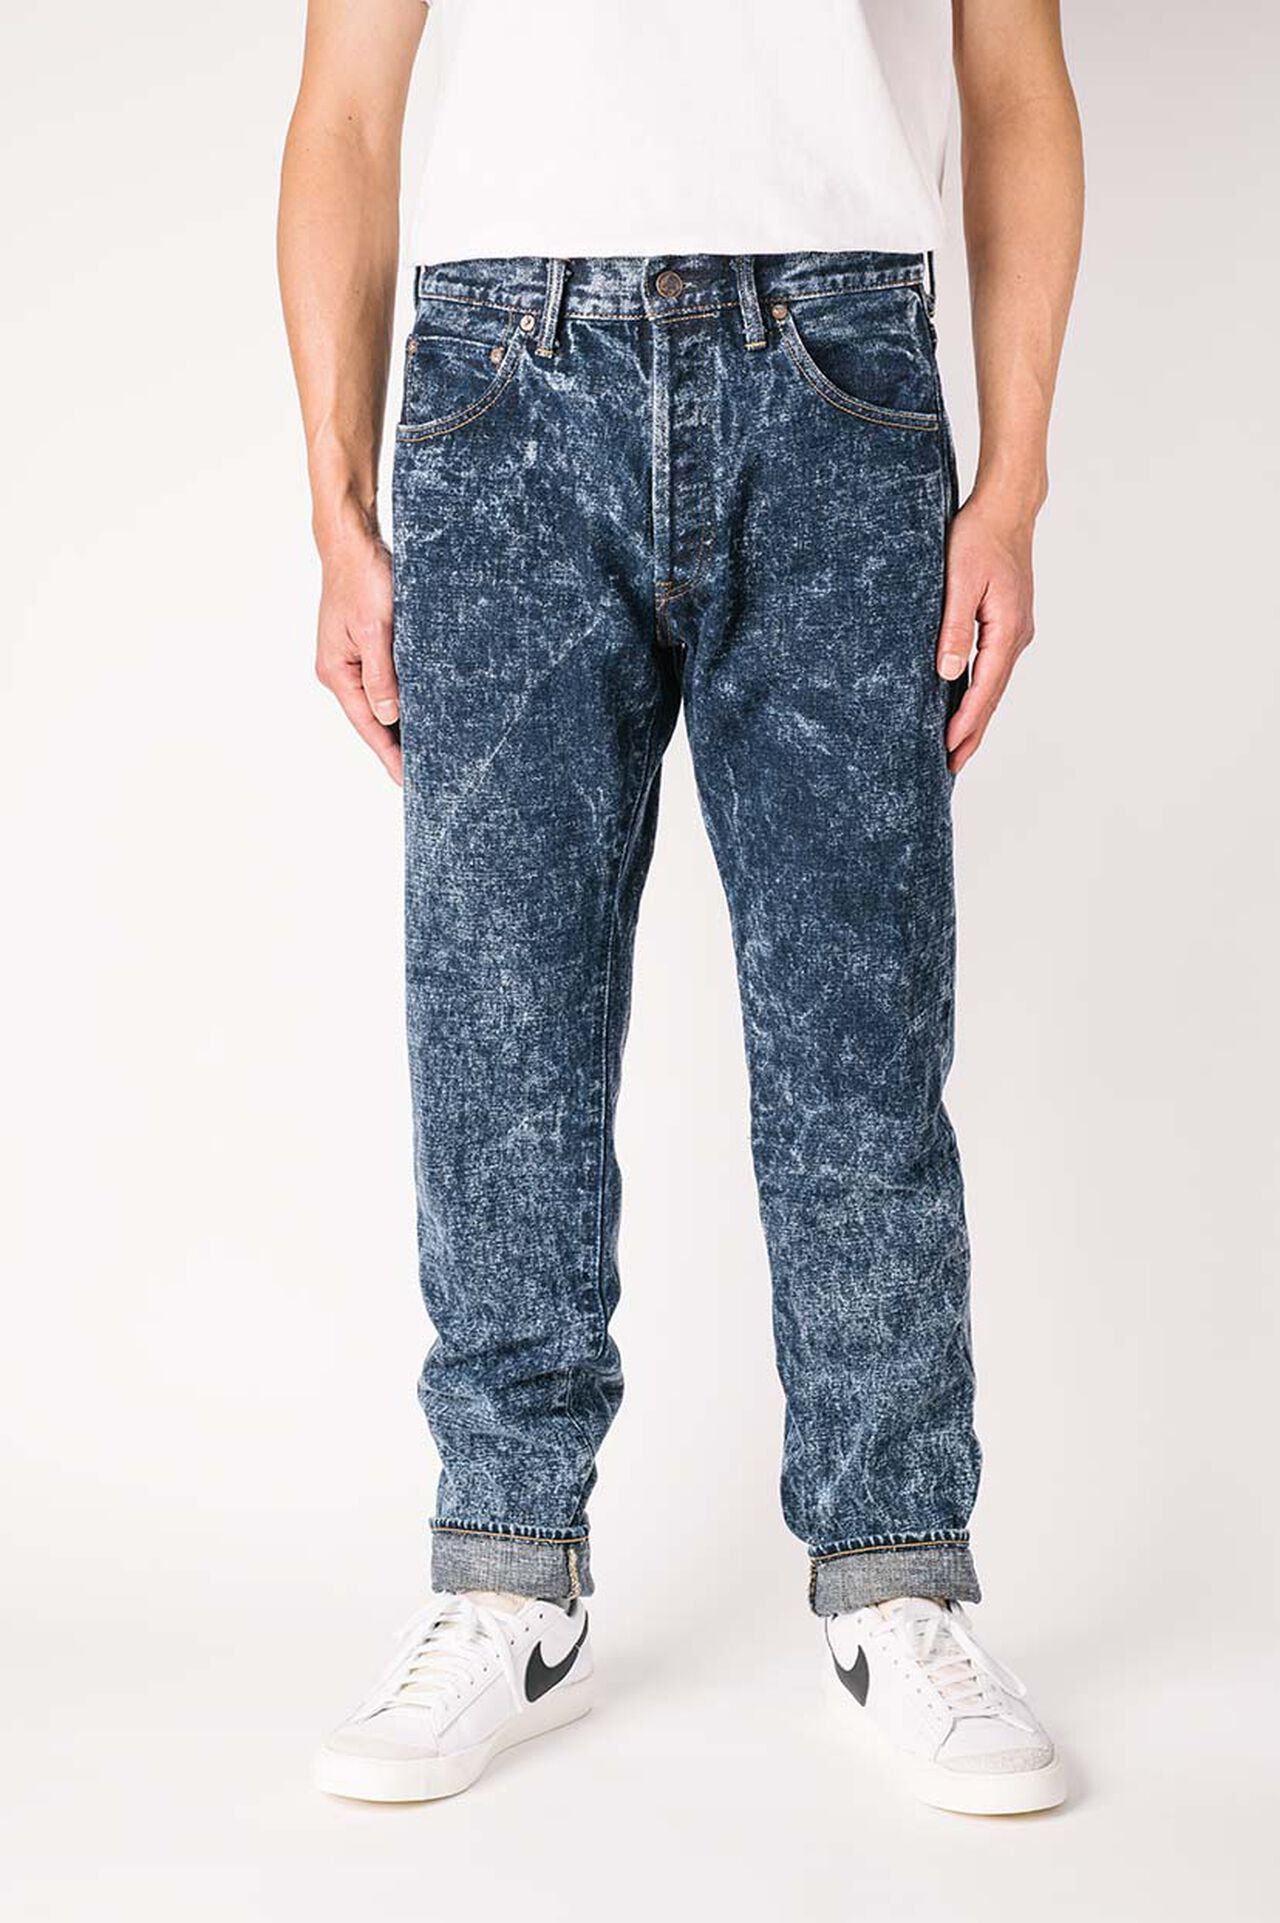 Buy NAWHT 16.5oz Natural Indigo Acid Wash High Rise Tapered Jeans for 350.00 | Tanuki